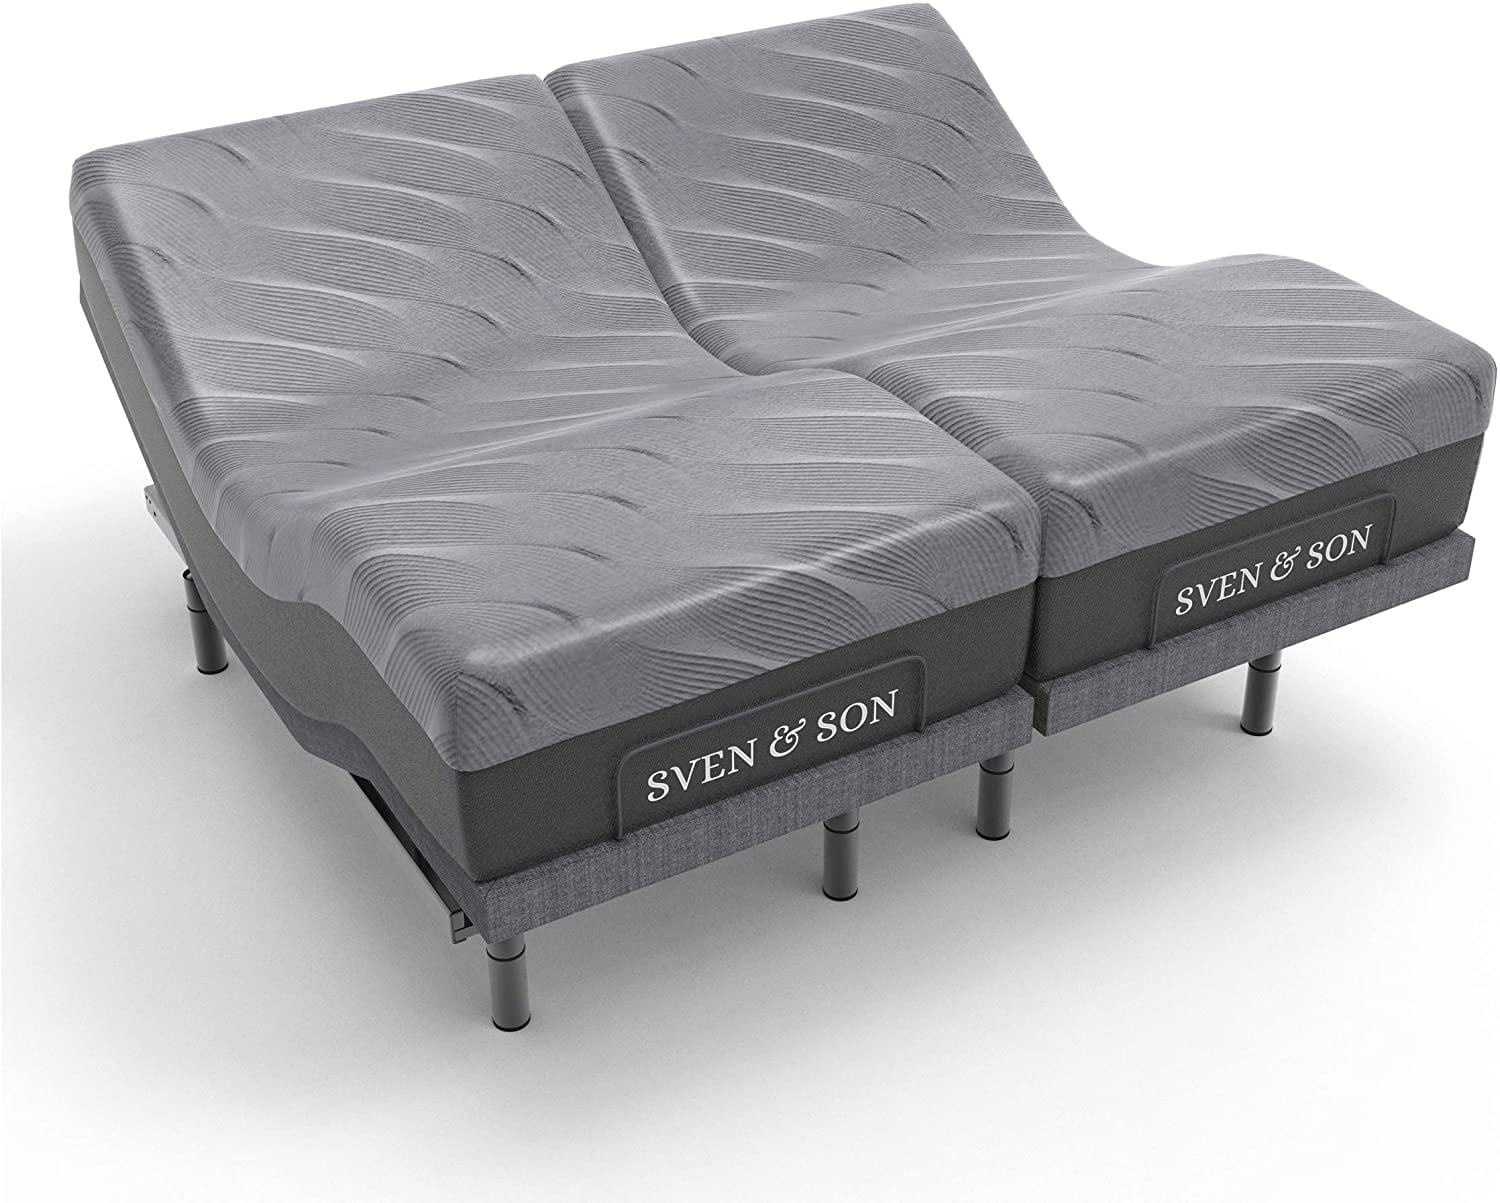 Sven Son Split King Adjustable Bed, Half Split King Adjustable Bed